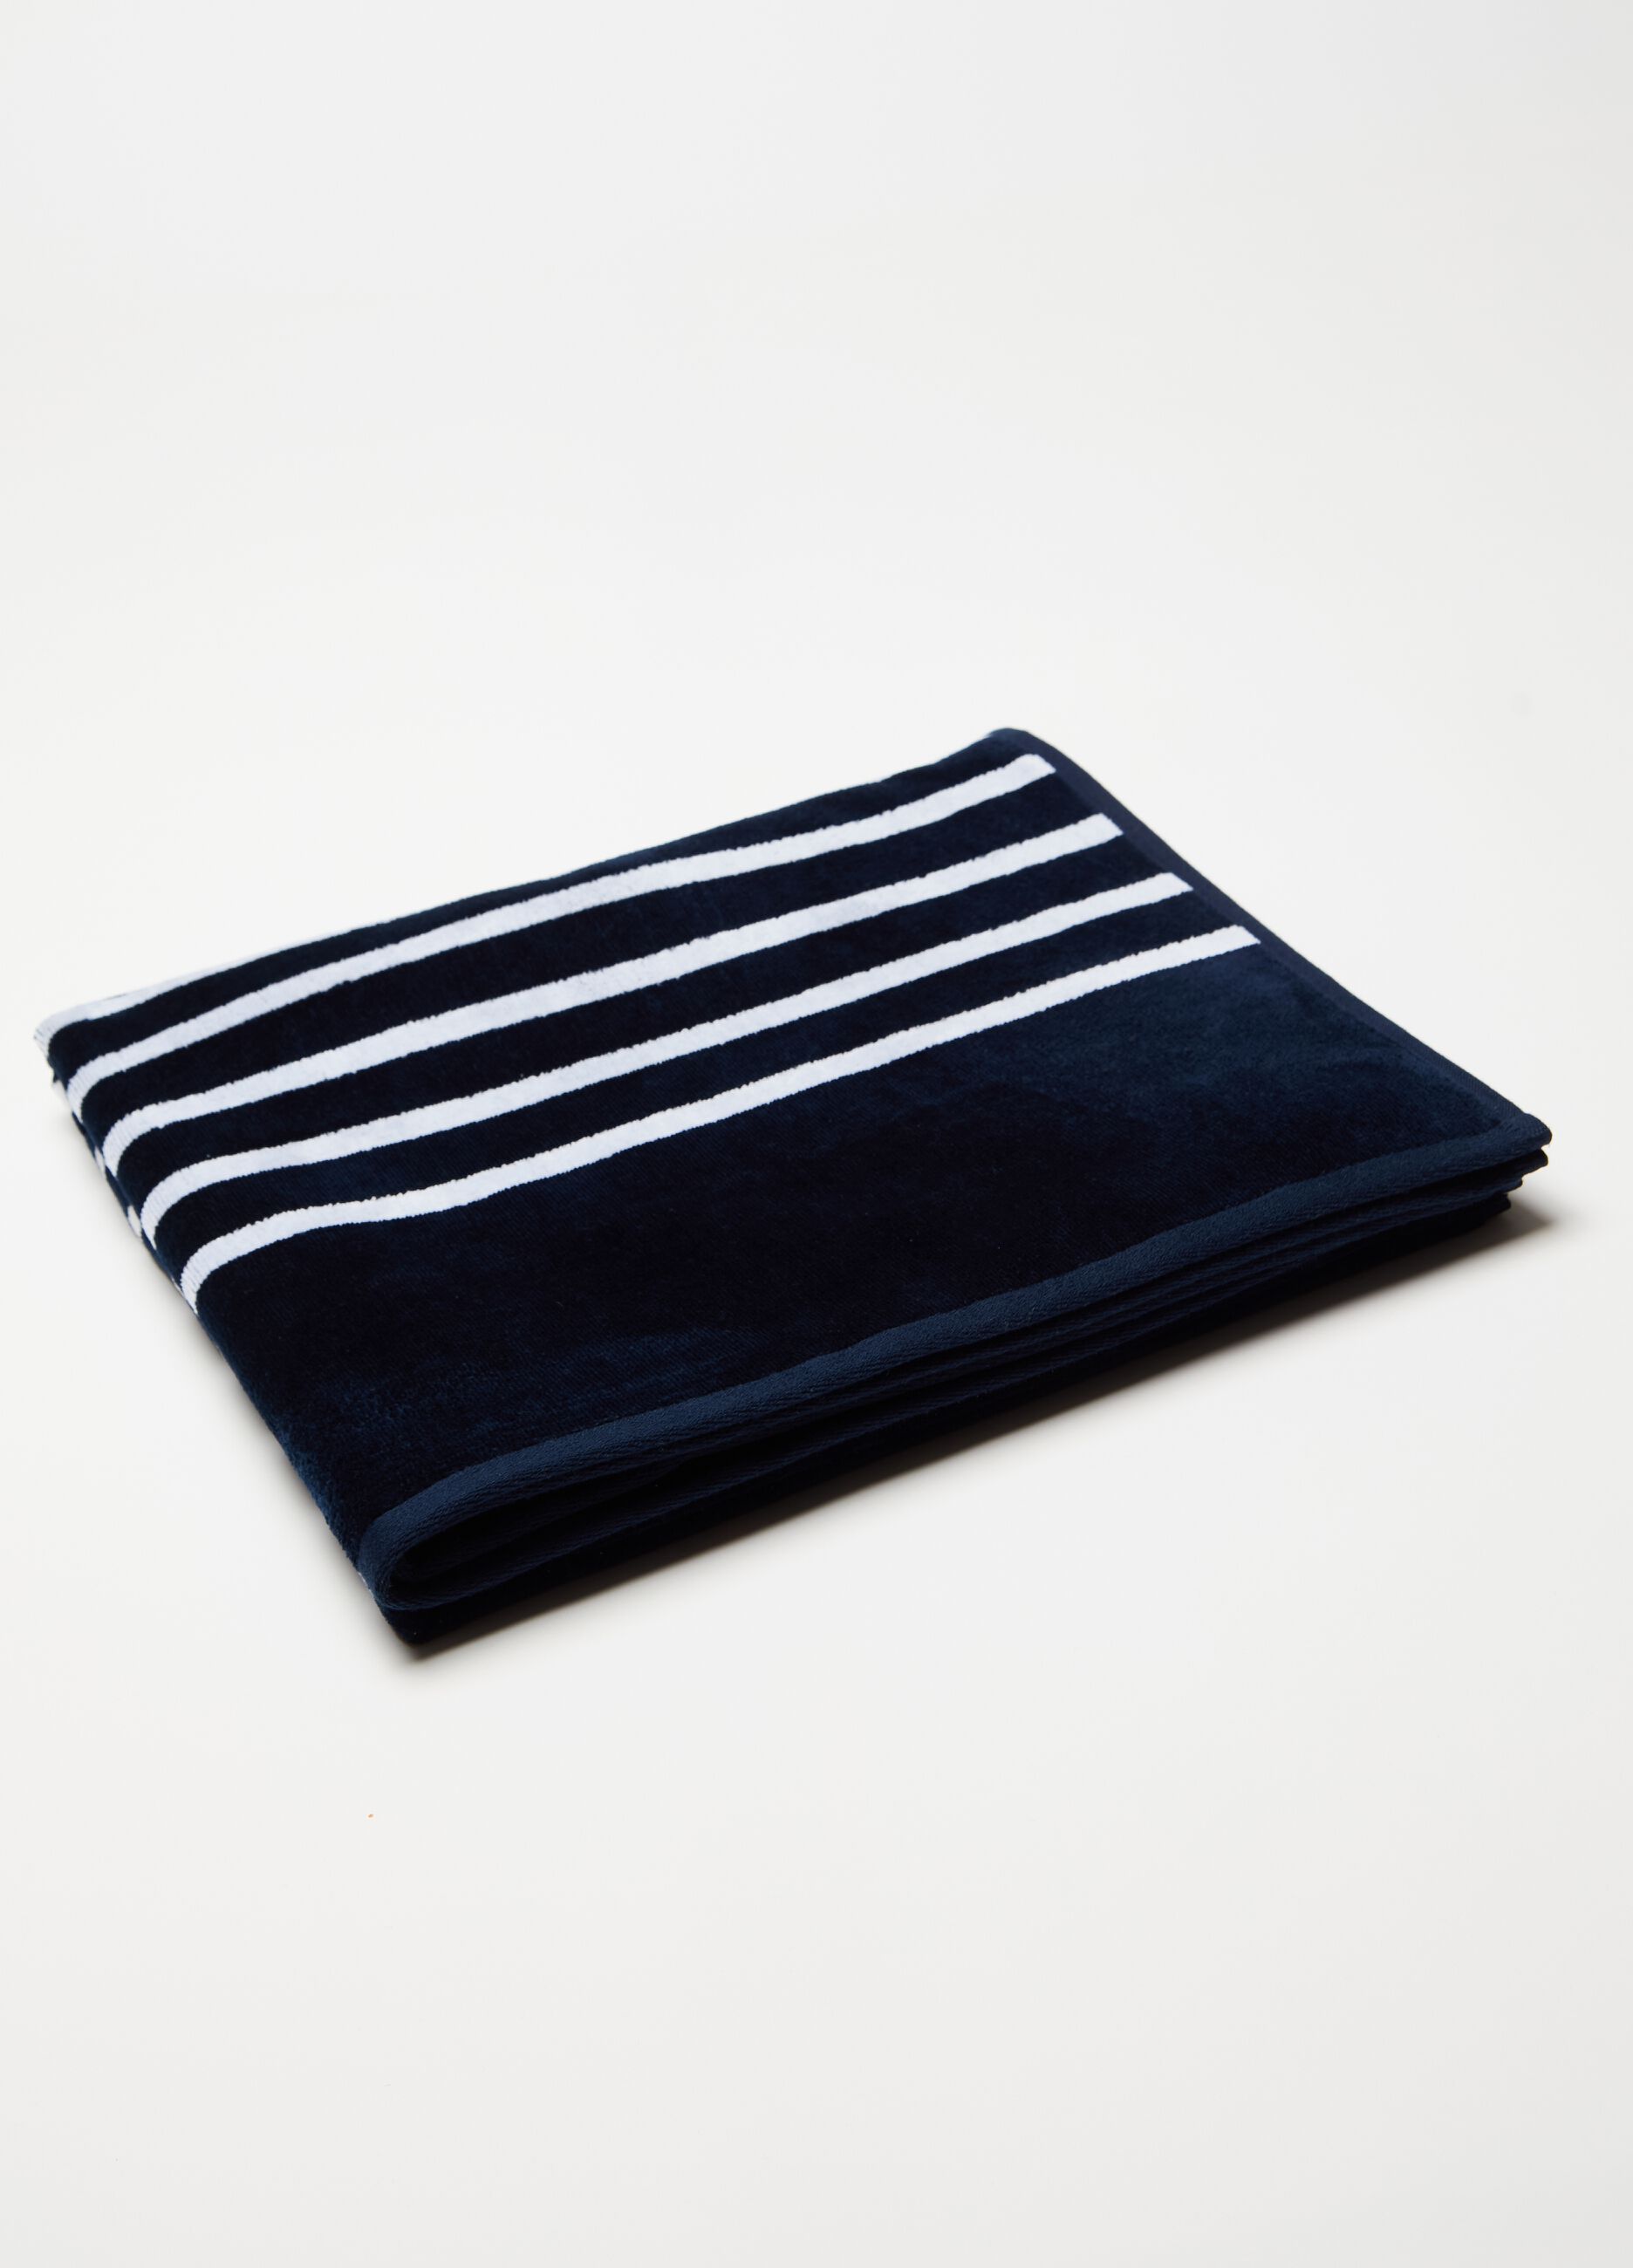 Beach towel with thin striped print